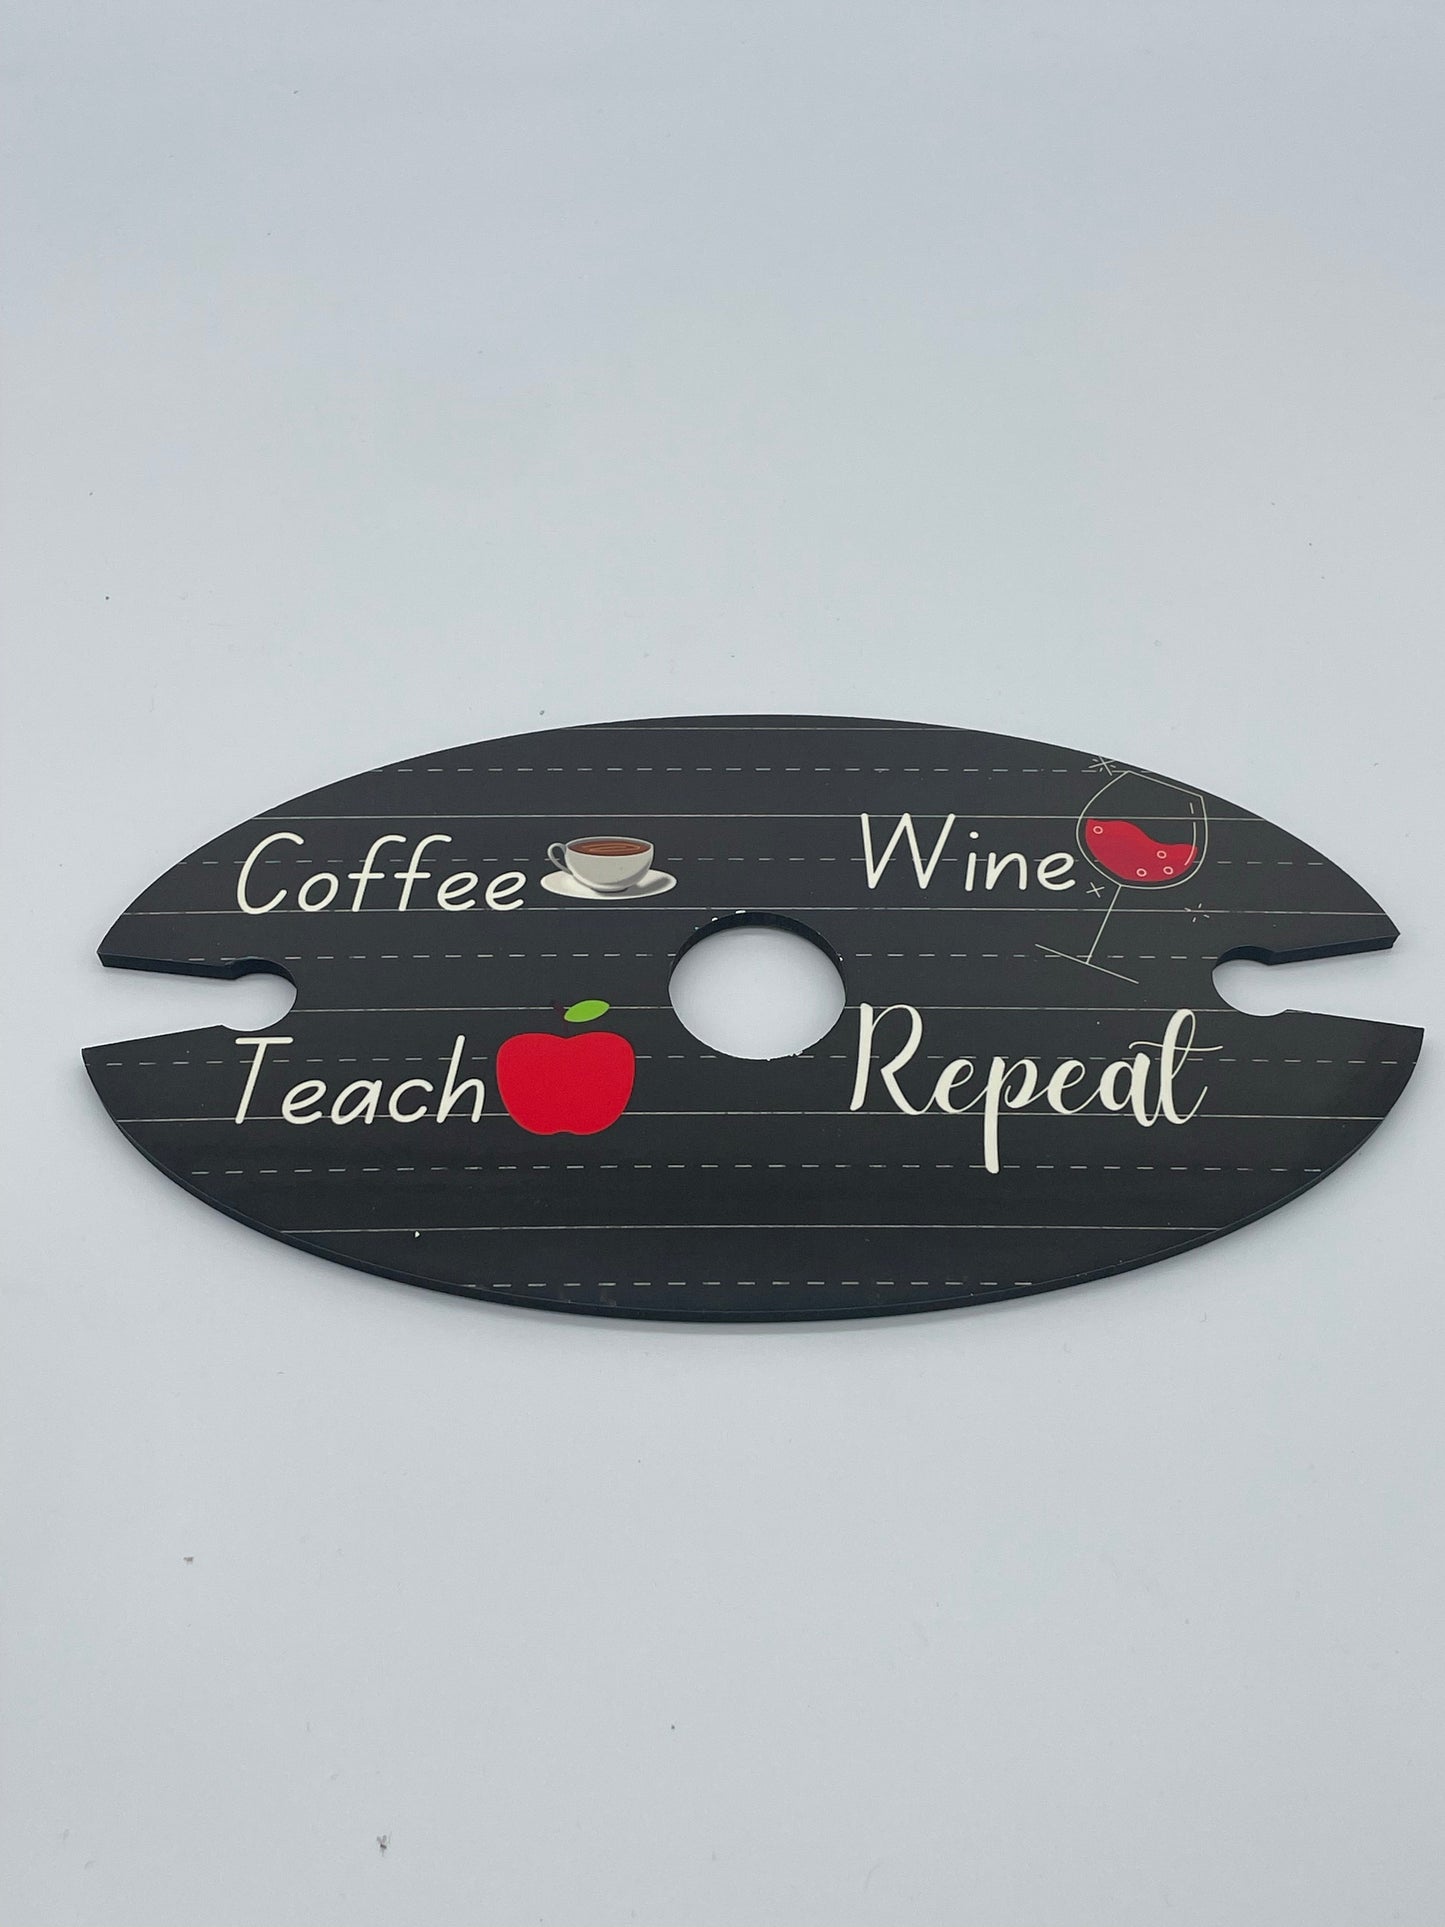 Coffee, Teach, Wine, Repeat Wine holder